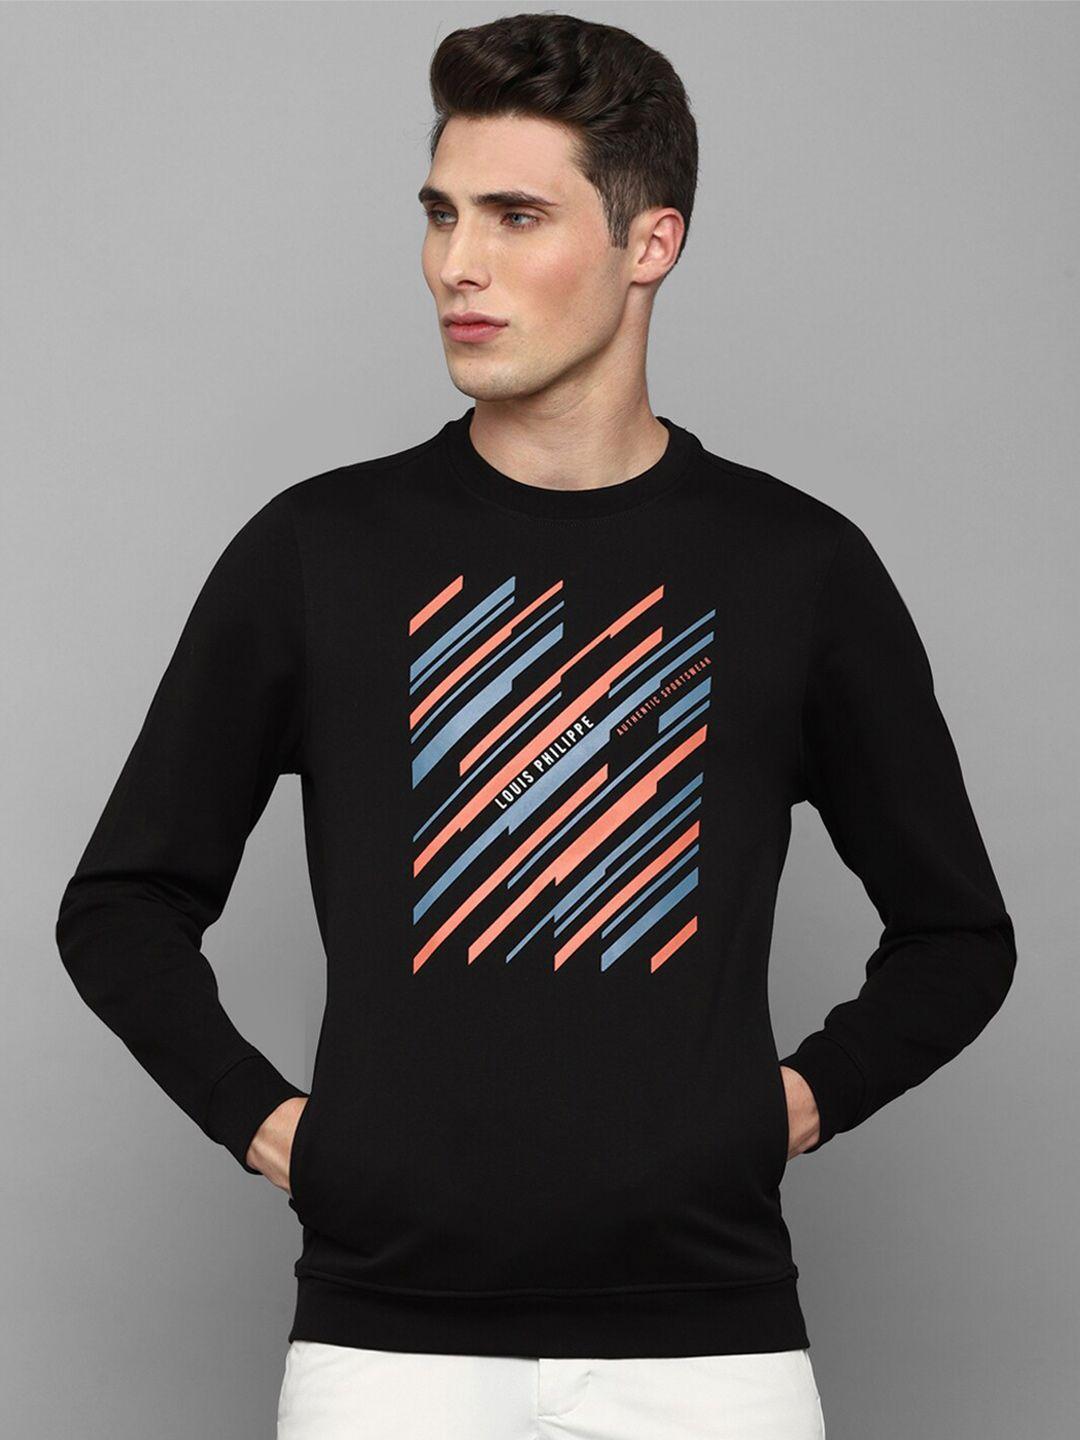 louis philippe sport men graphic printed sweatshirt